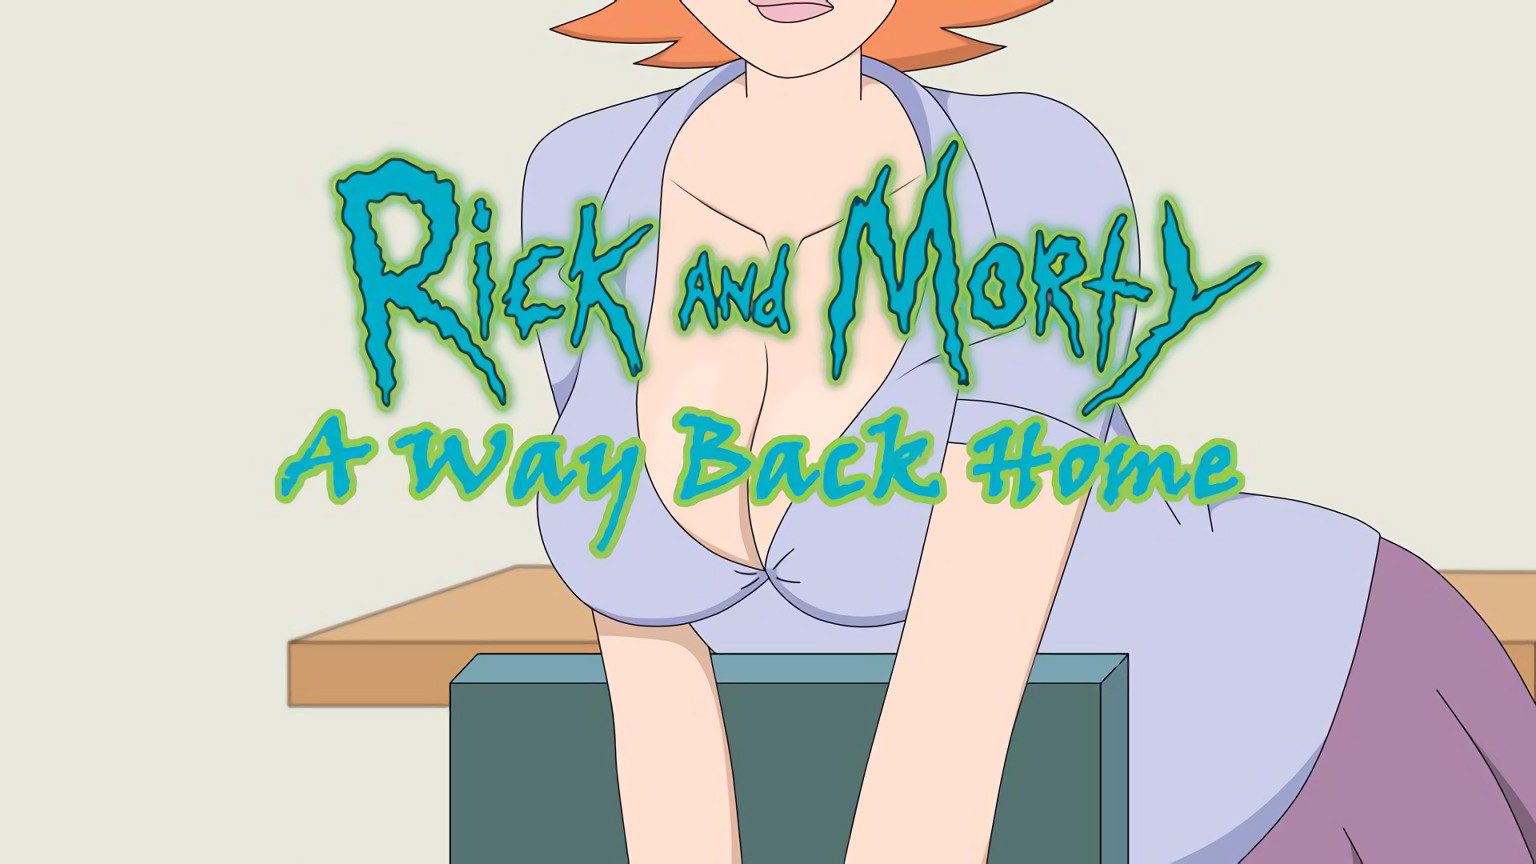 Rick morty back home sister